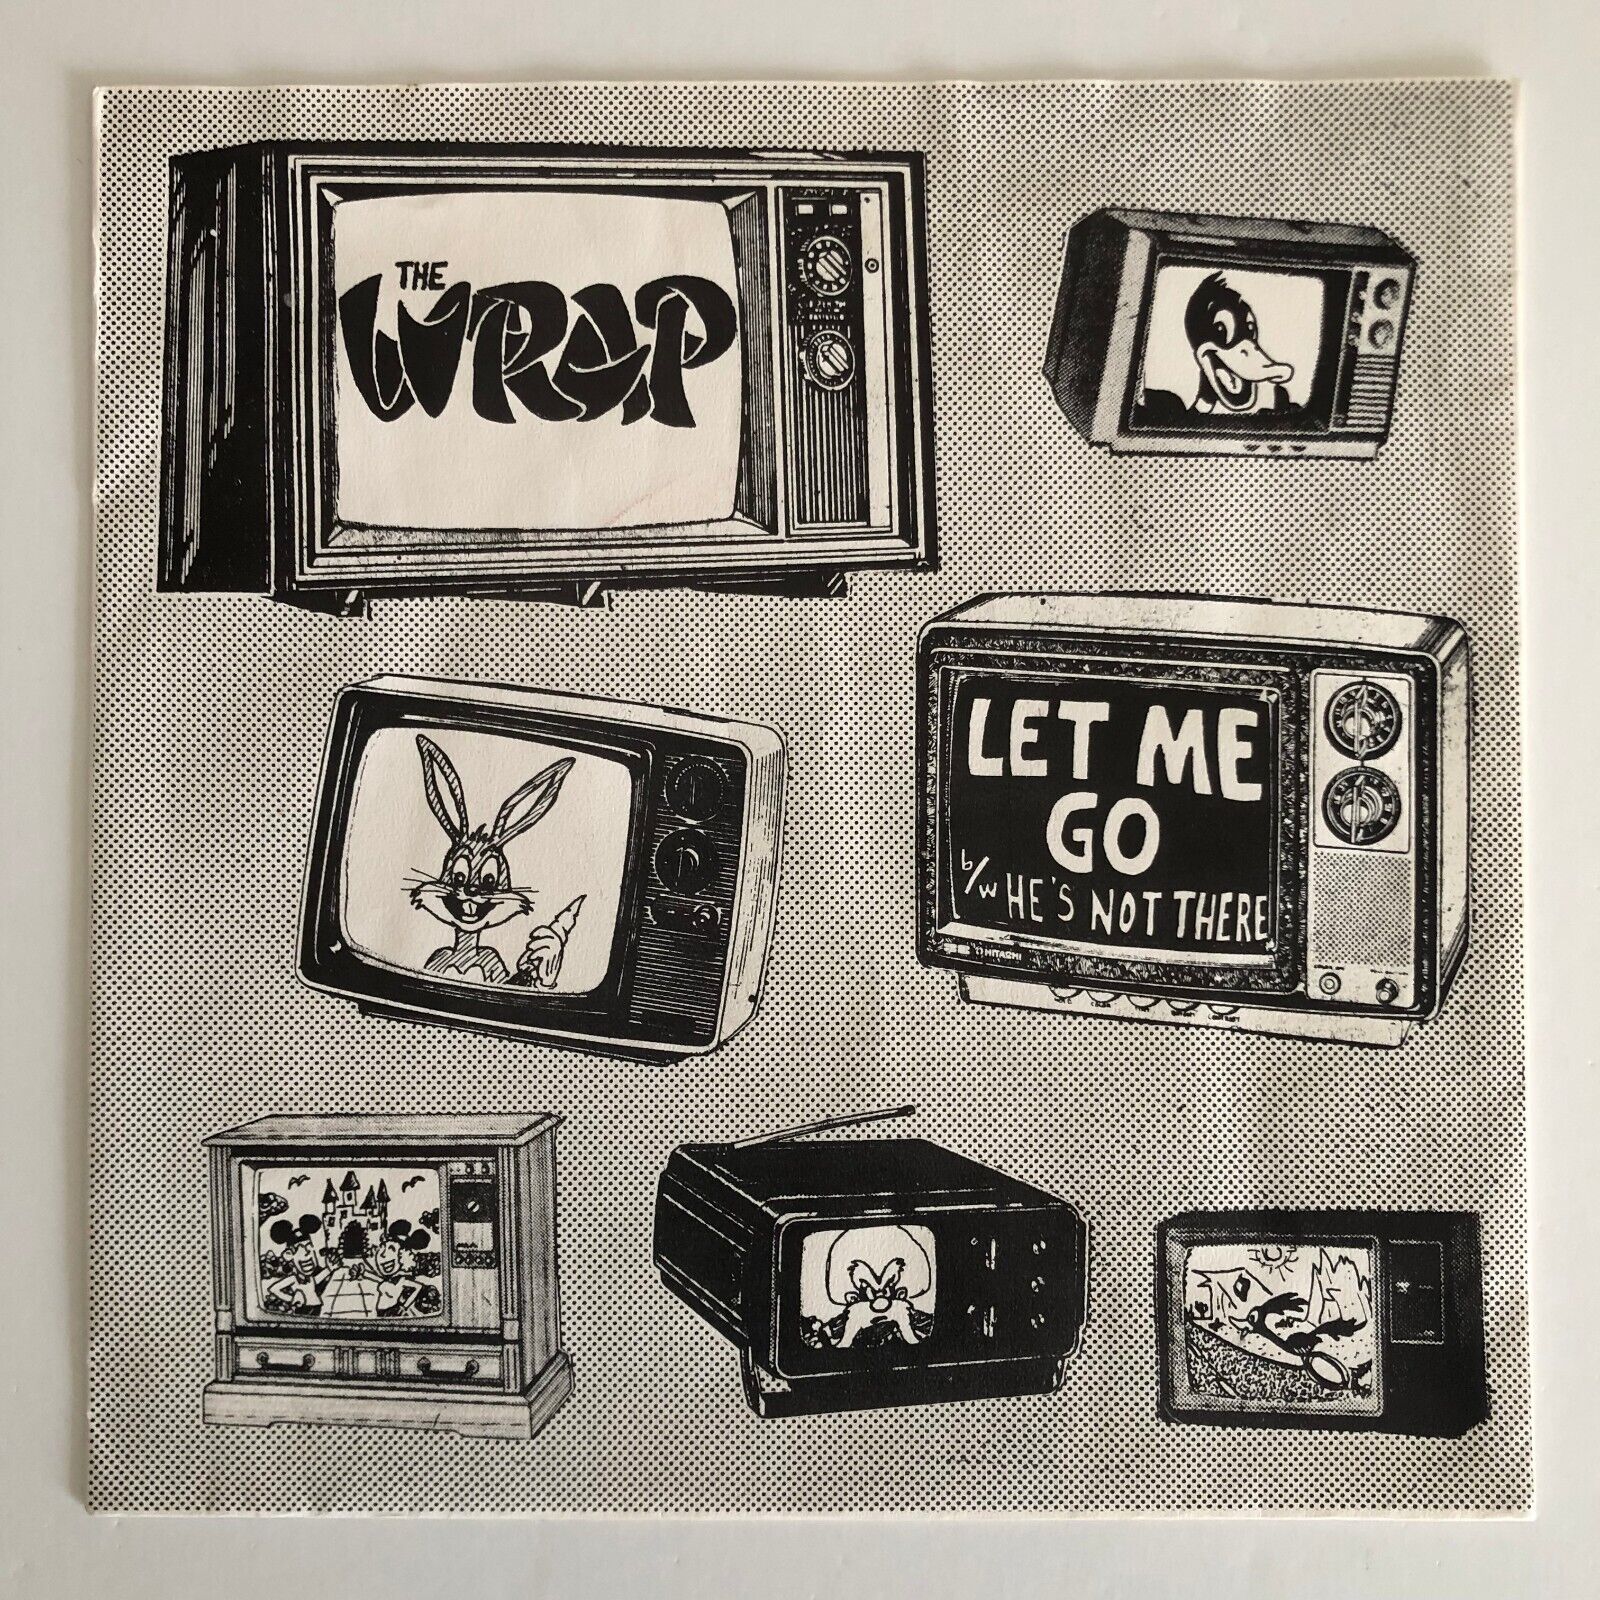 The Wrap -Let Me Go 7" kbd punk Eat Sector 4 Antler Joe Sheer Smegma Roach Motel